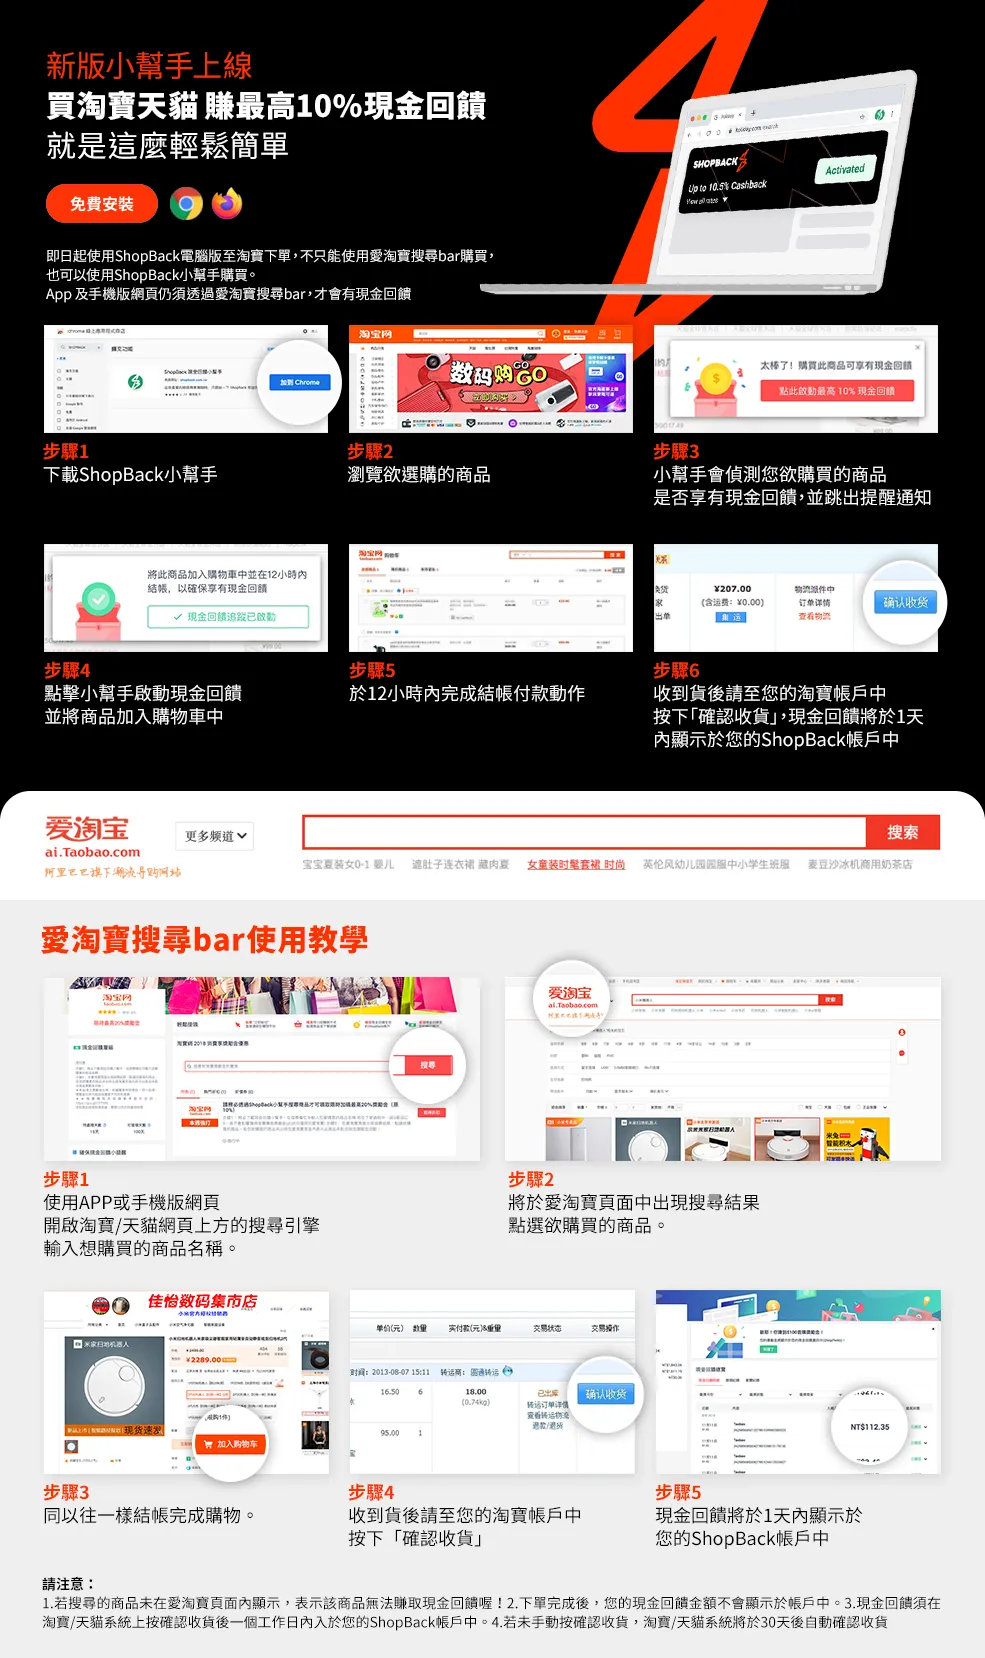 MerchantPage_Taobao_Edu.jpg